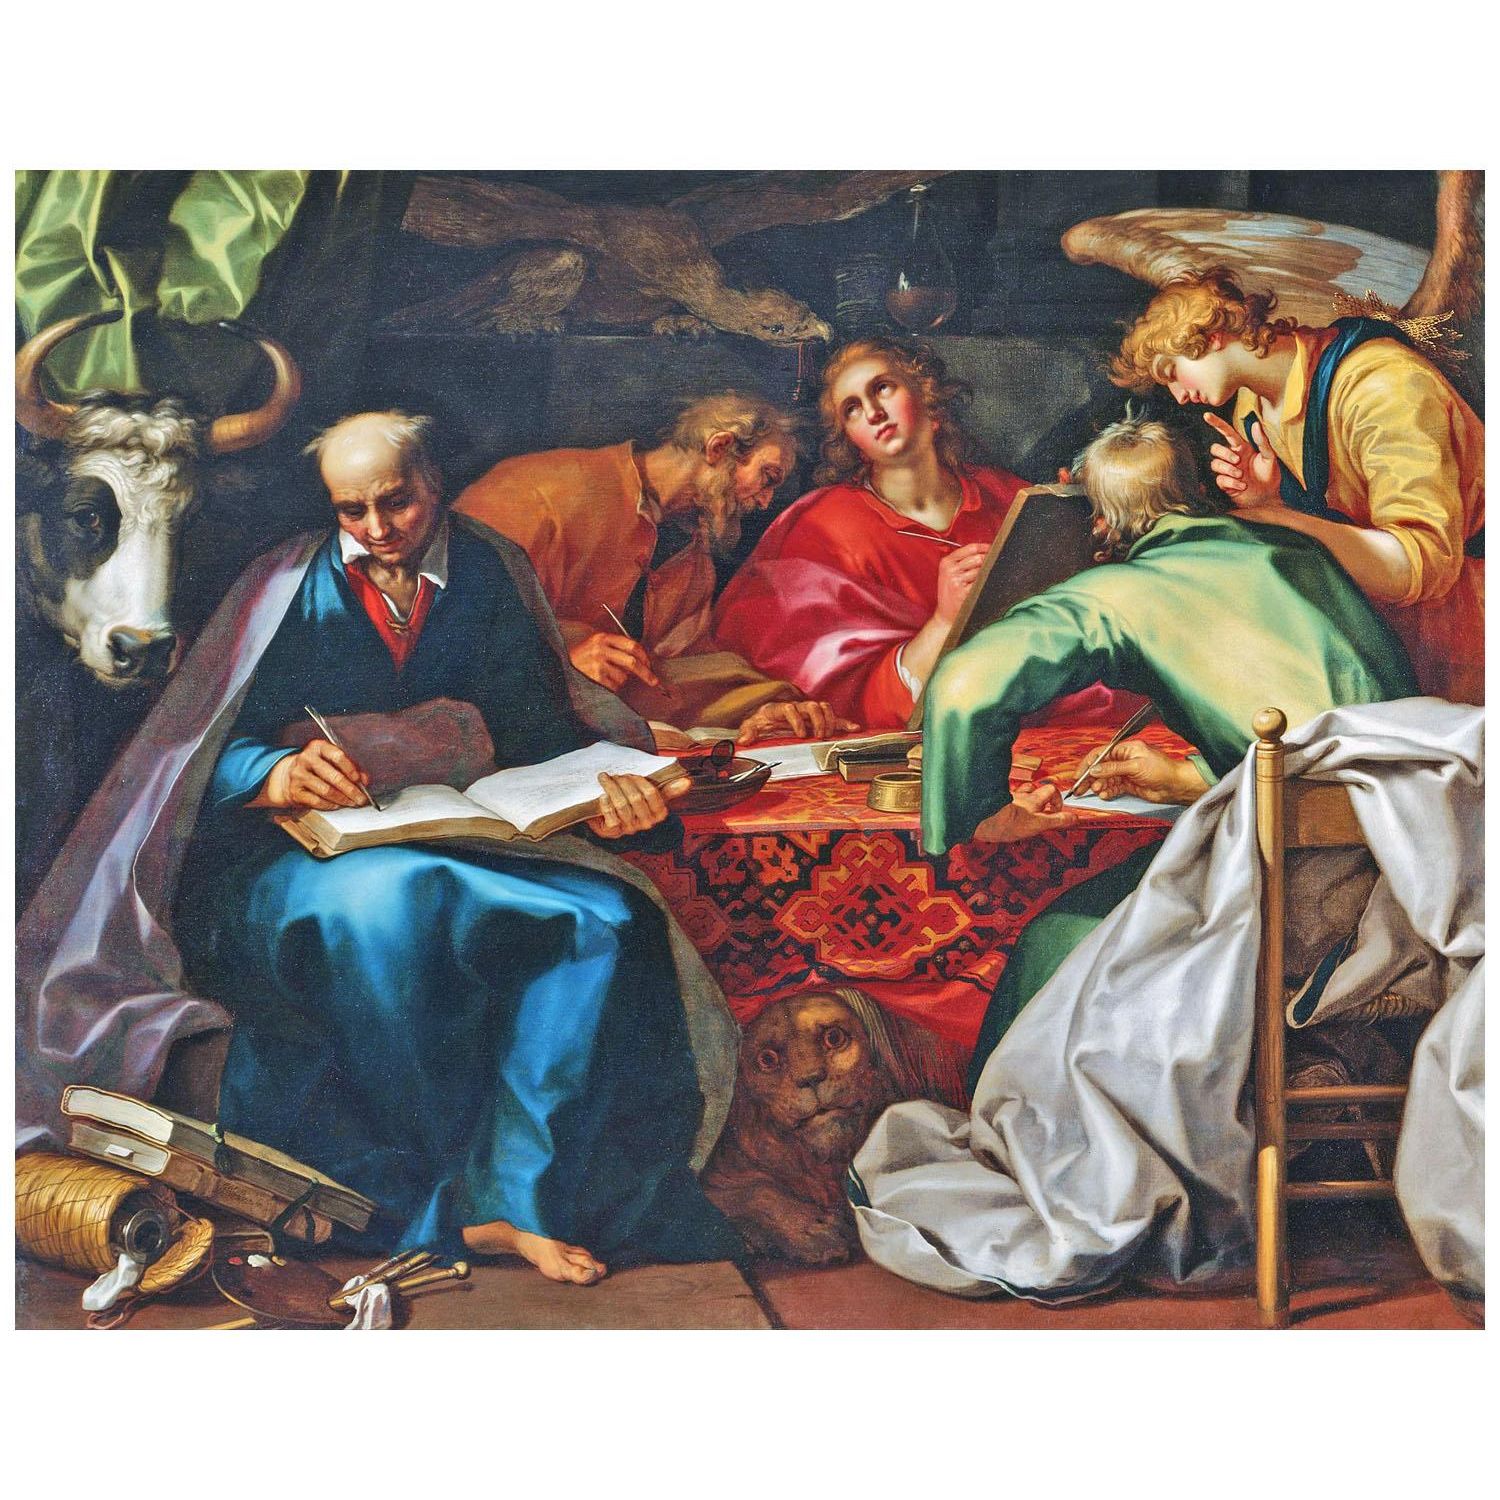 Abraham Bloemaerts. The Four Evangelists. 1615. Princeton University Art Museum